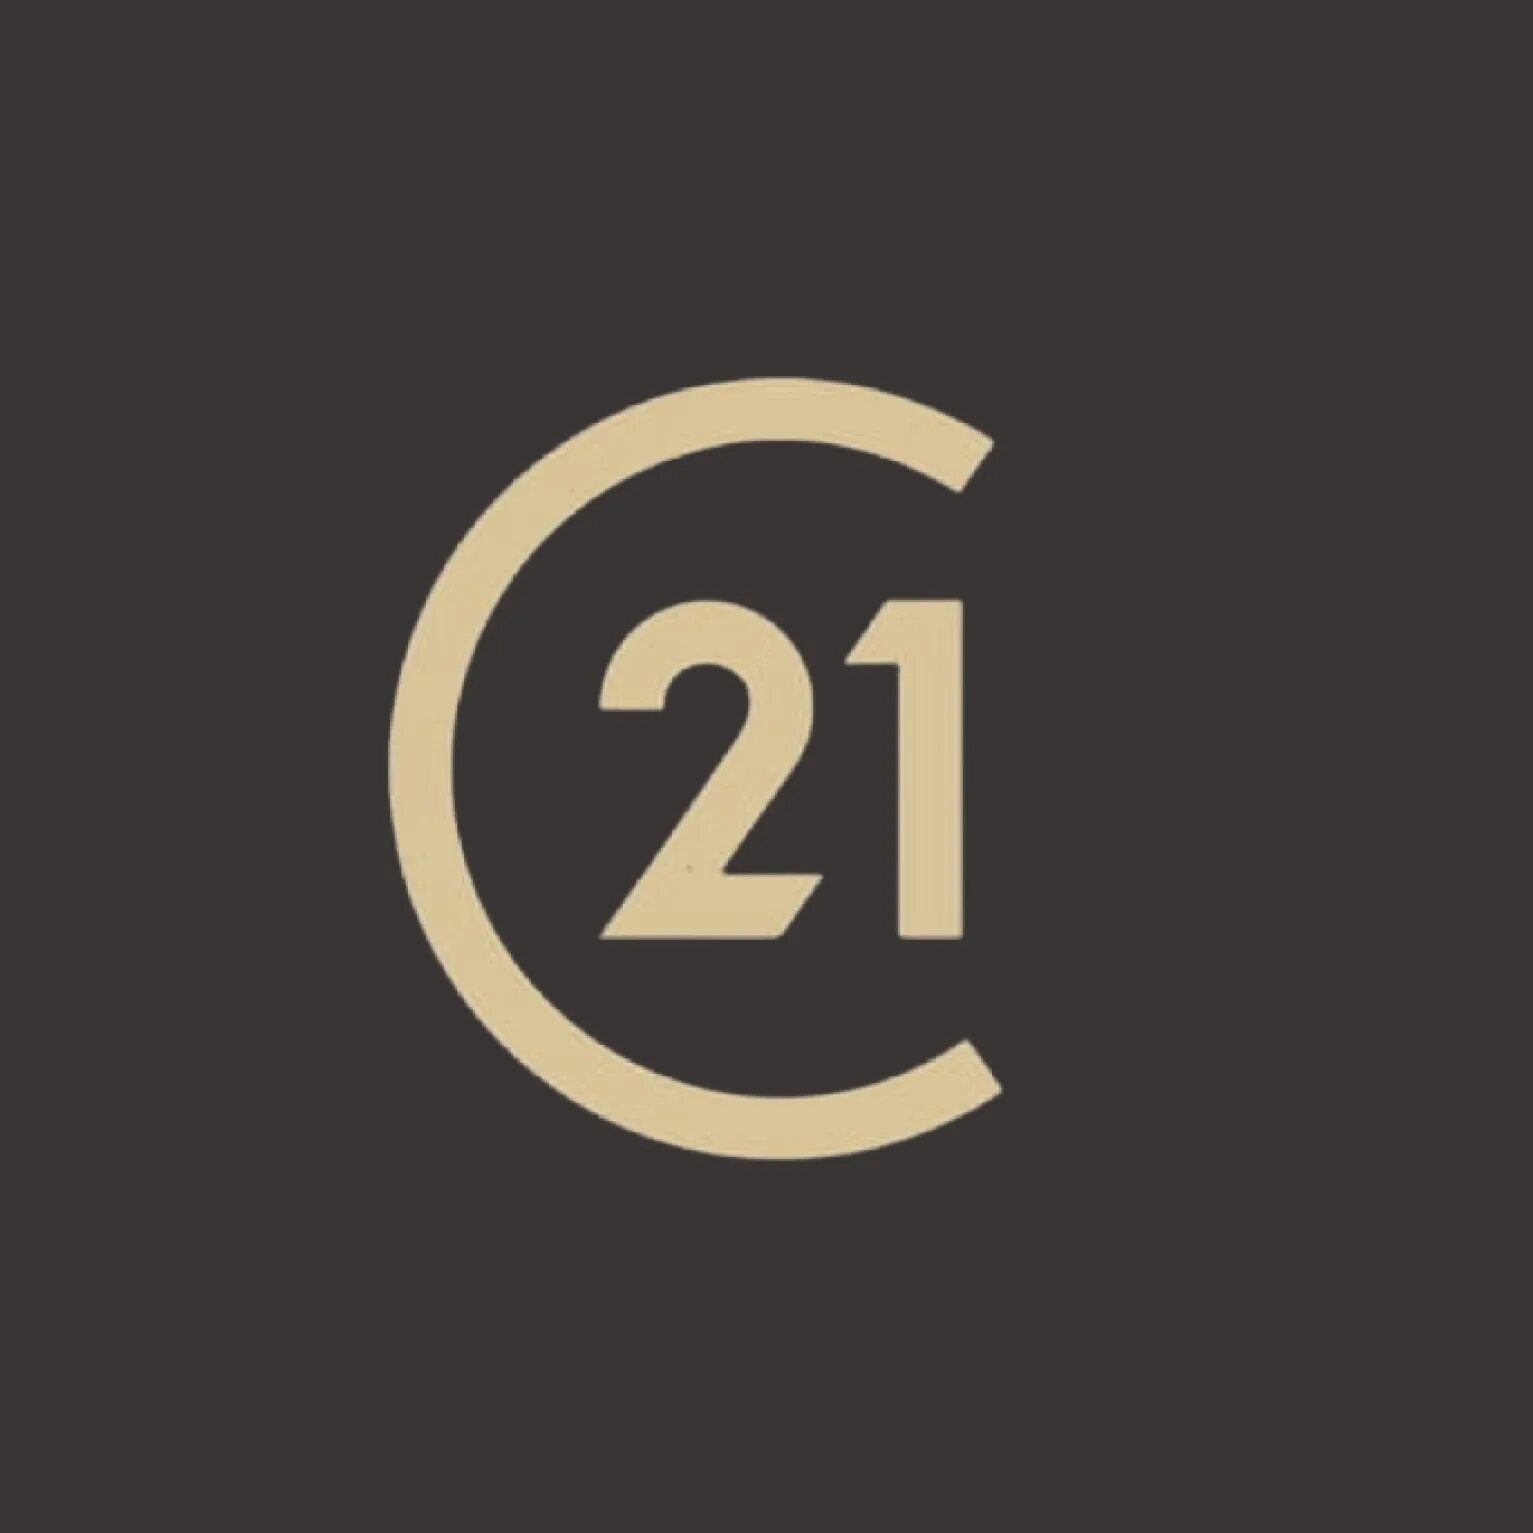 21 21 meaning. Сентури 21. Сенчури 21. 21 Логотип. Century 21 агентство.